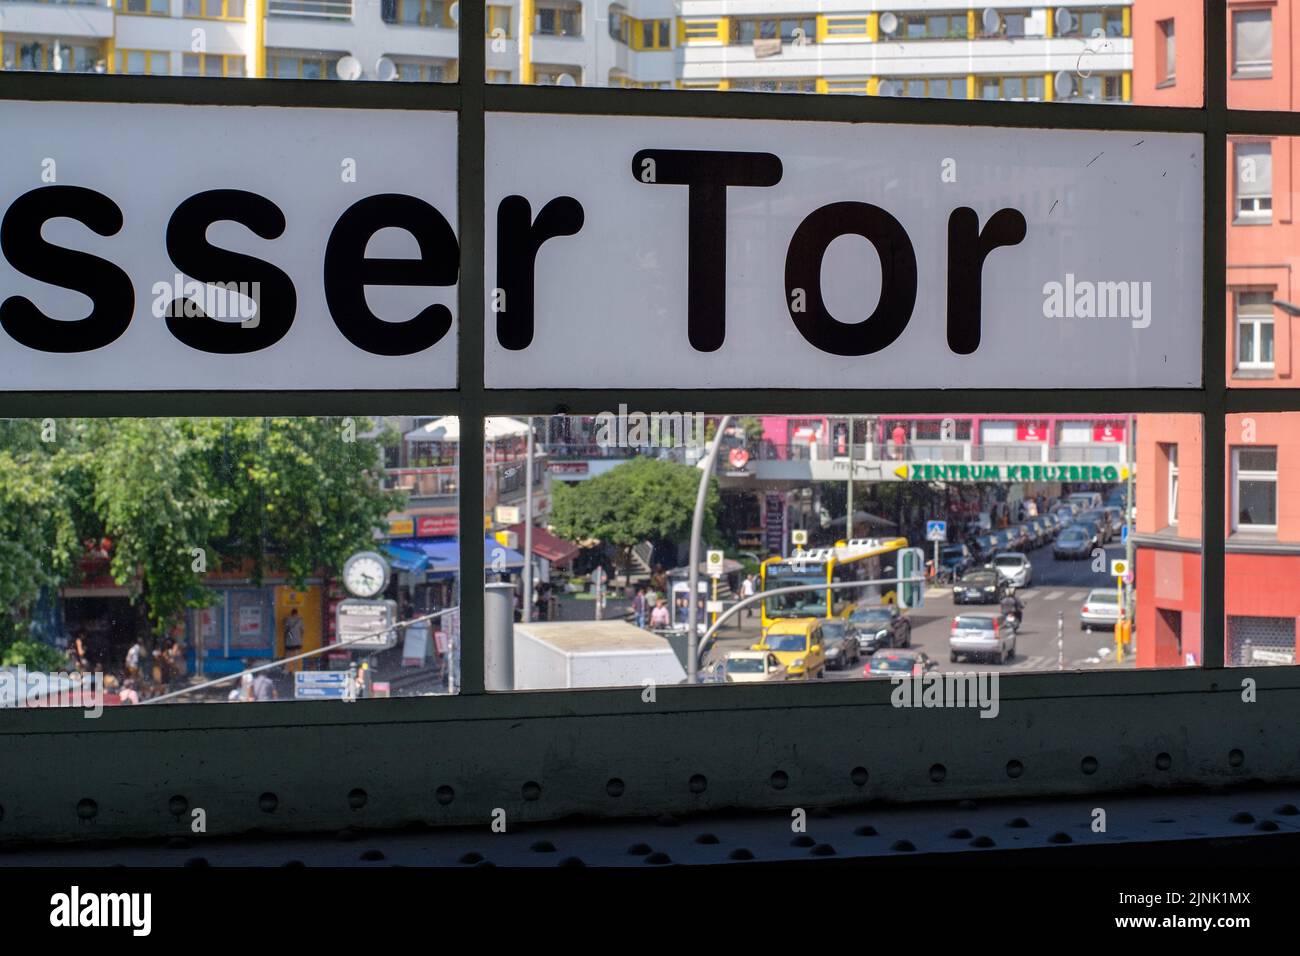 BERLIN, GERMANY - JUNE 9, 2018: View past the Kottbusser Tor station sign in the Kreuzberg area of Berlin, Germany on June 9, 2018. Stock Photo